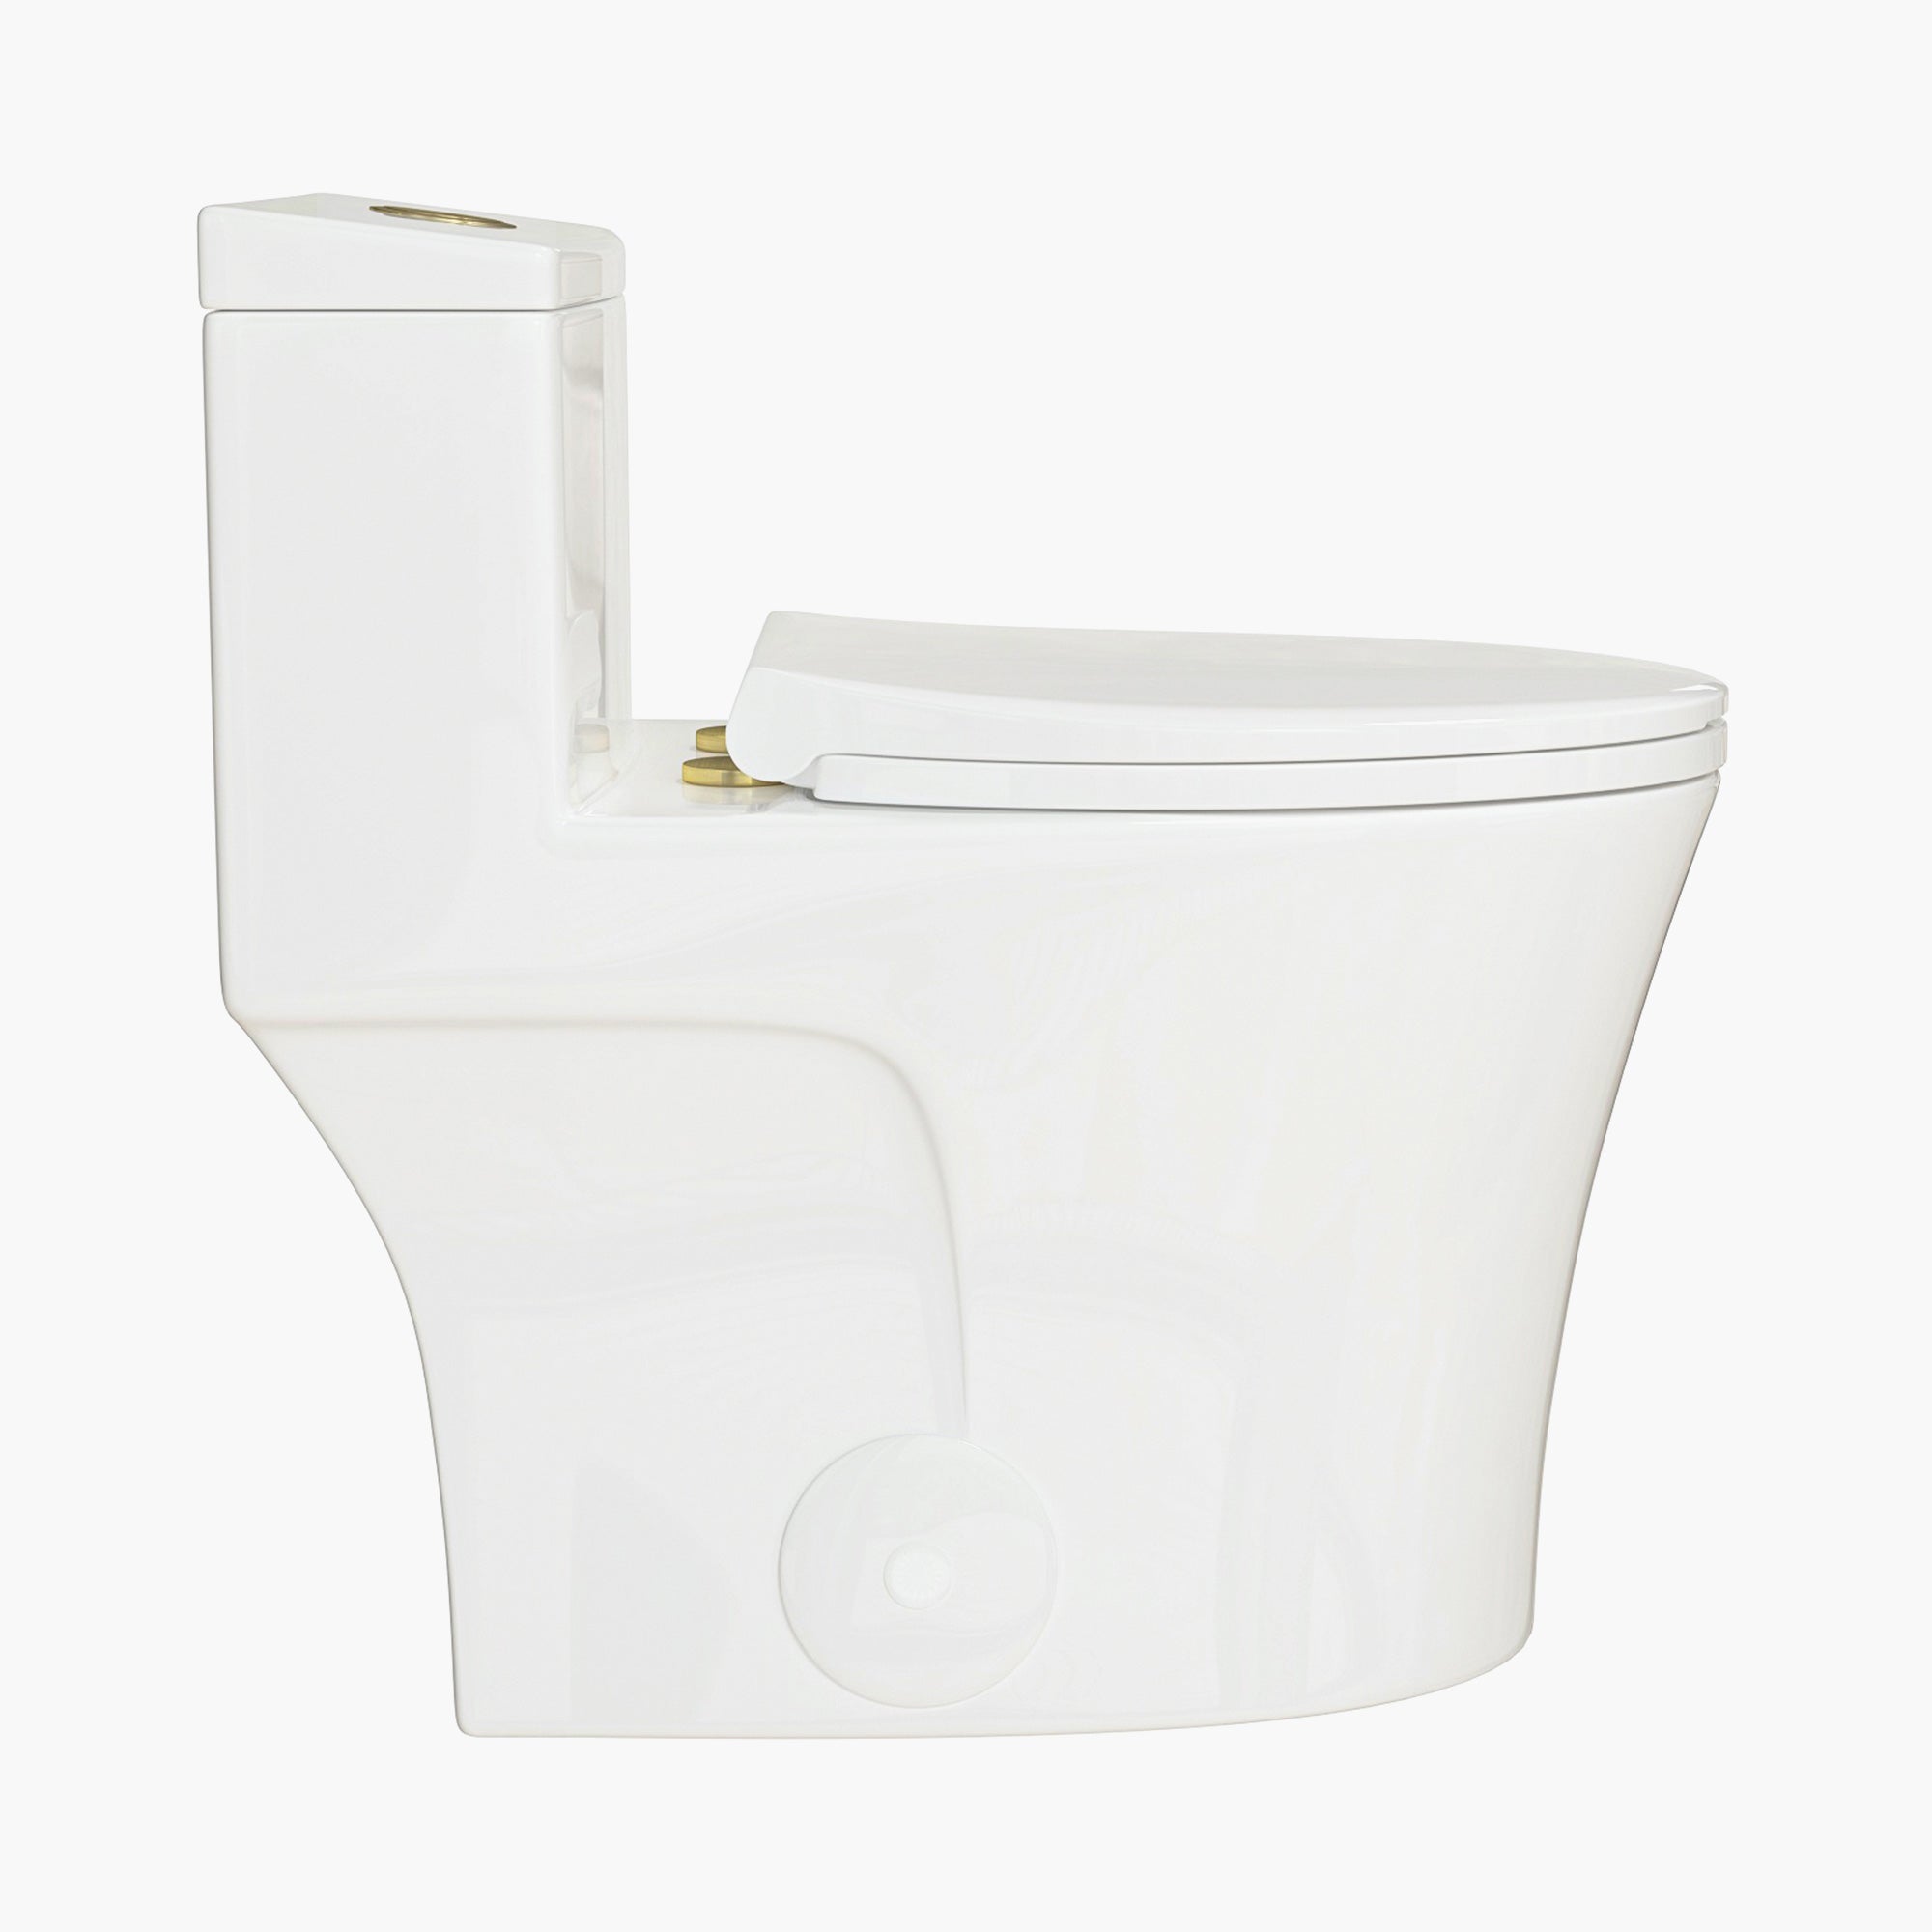 HOROW Elongated Dual Flush One Piece Toilet ADA Floor Mounted Toilet Model T0338W-G